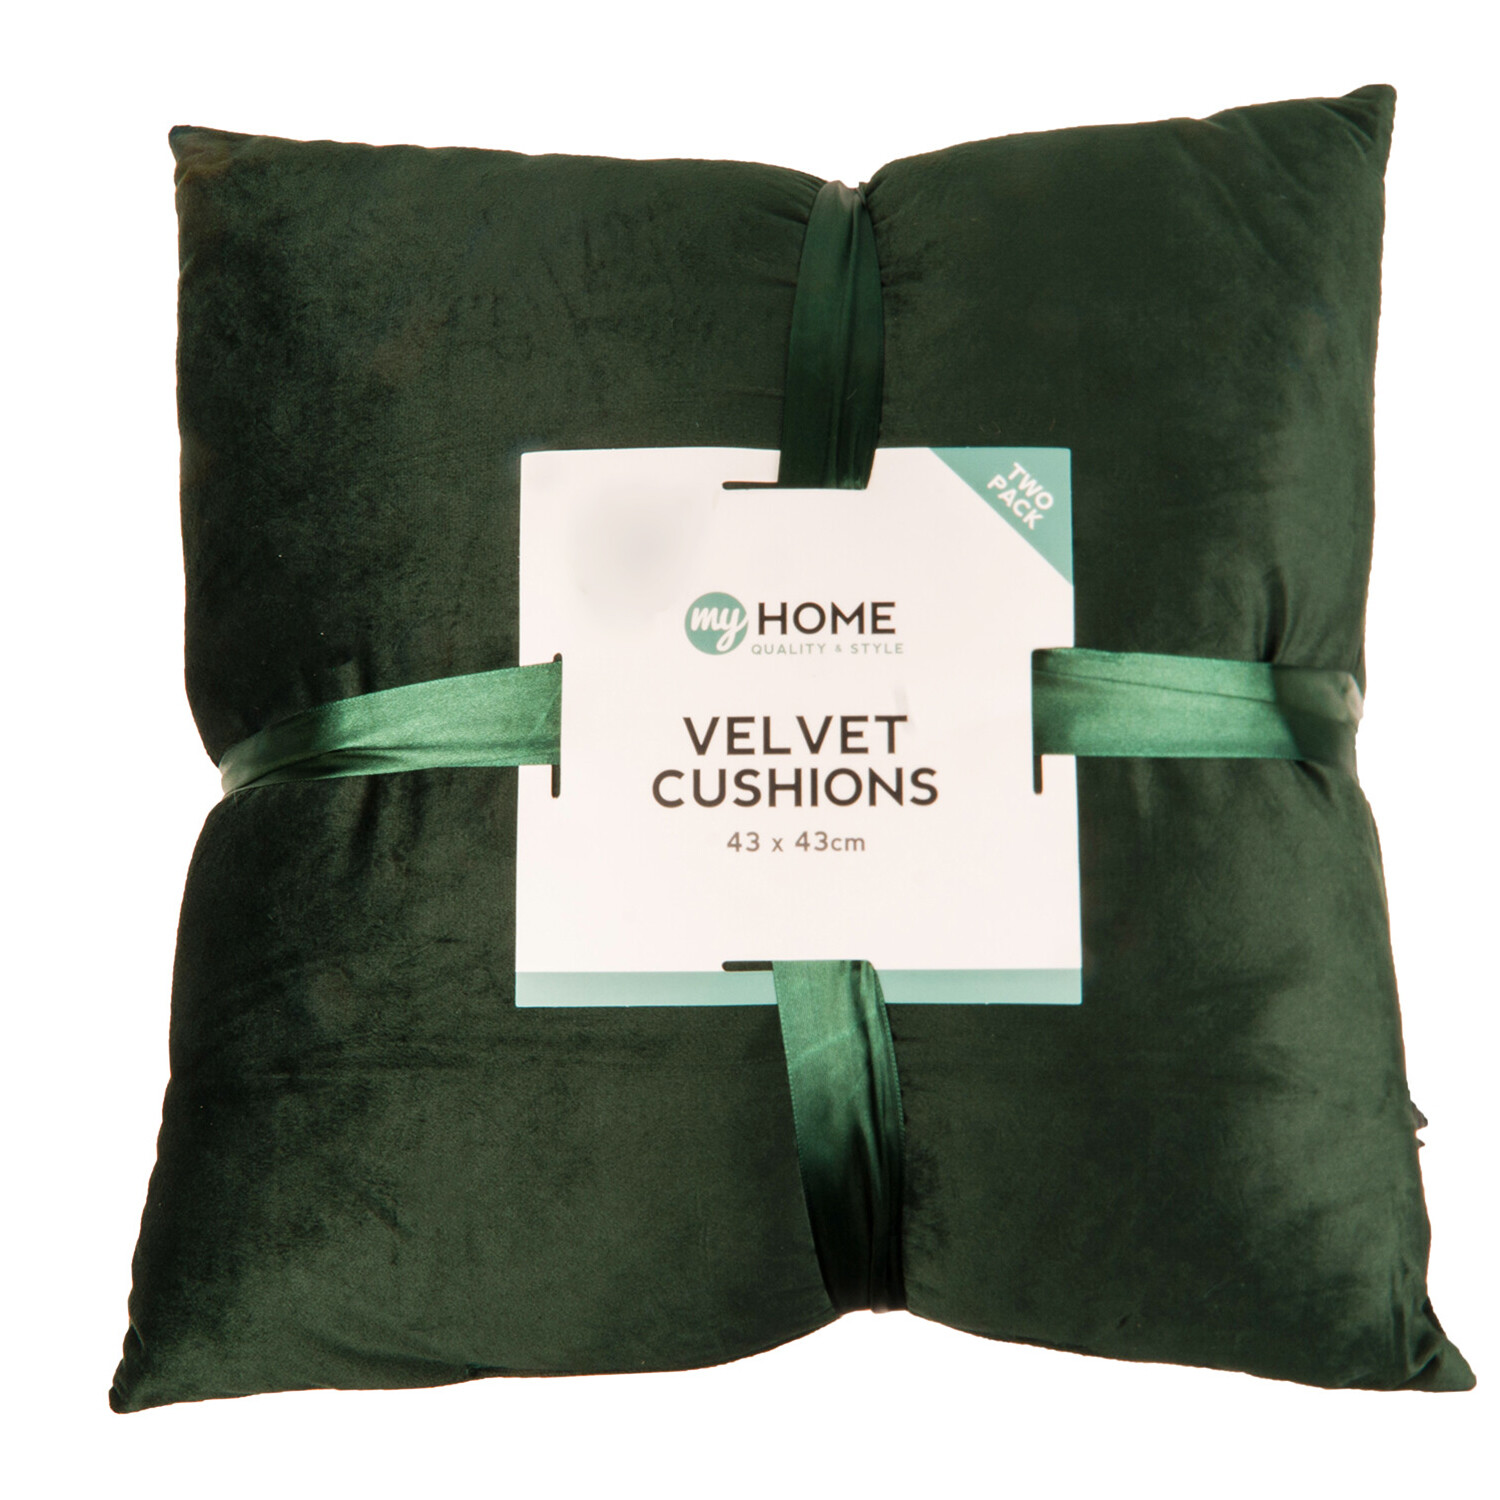 My Home Emerald Velvet Cushions 2 Pack Image